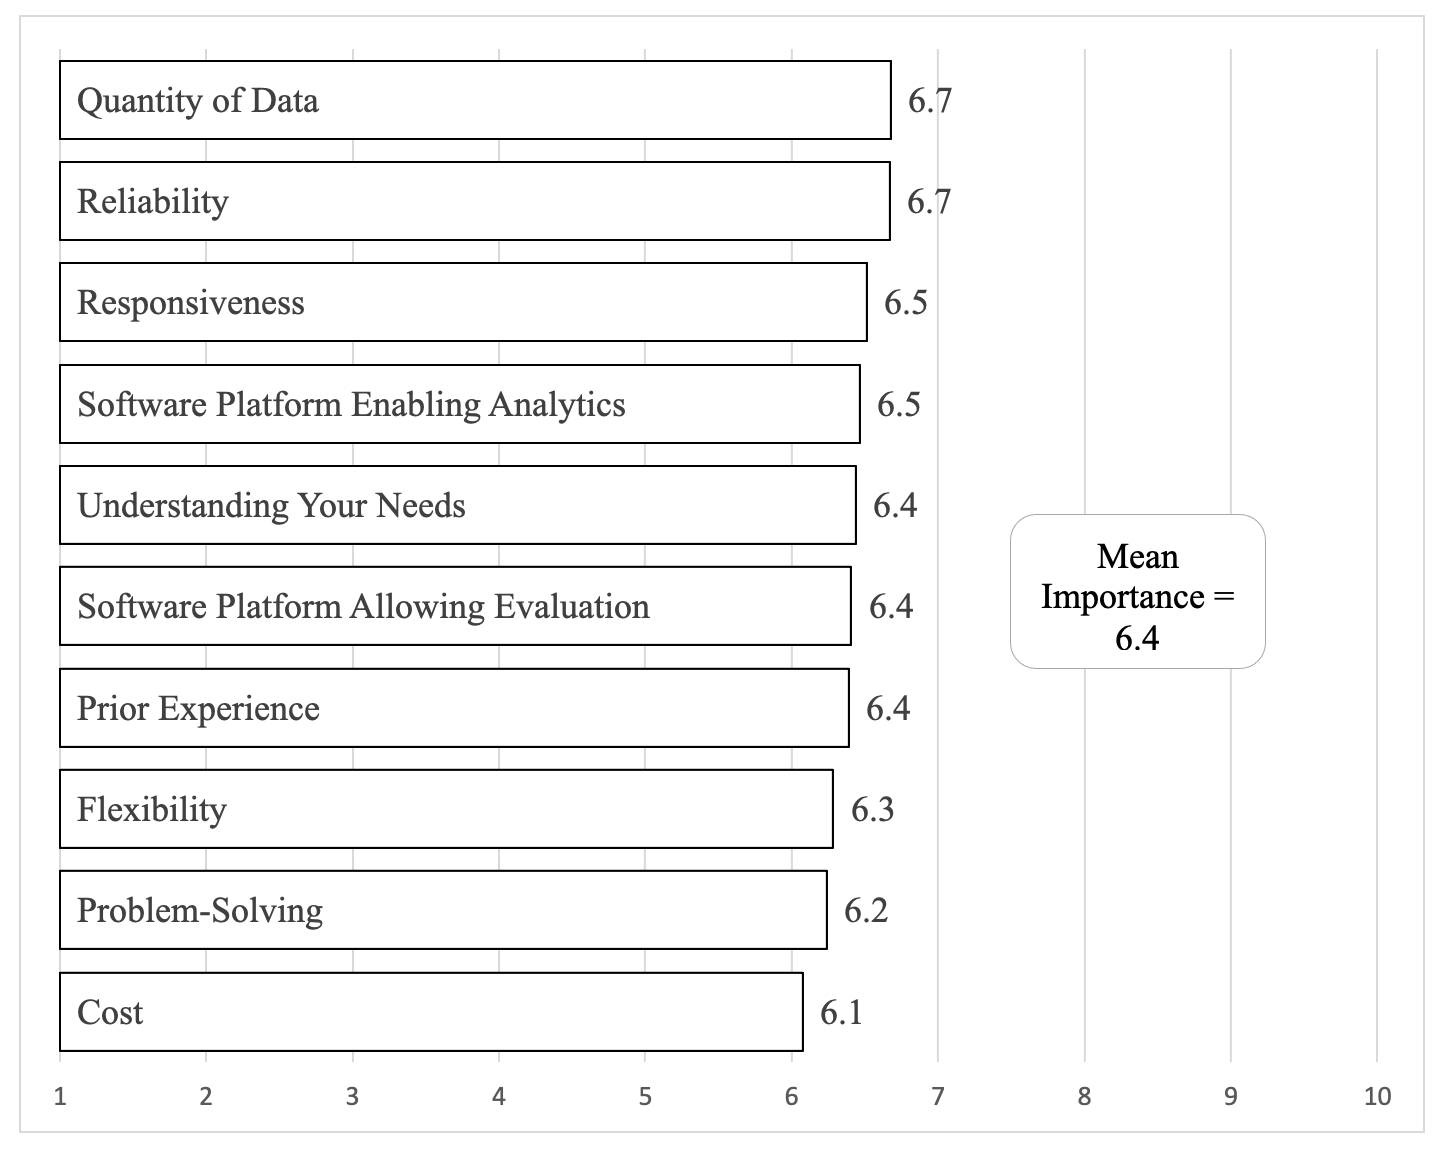 Figure 2. Satisfaction with Data Intermediaries/Software